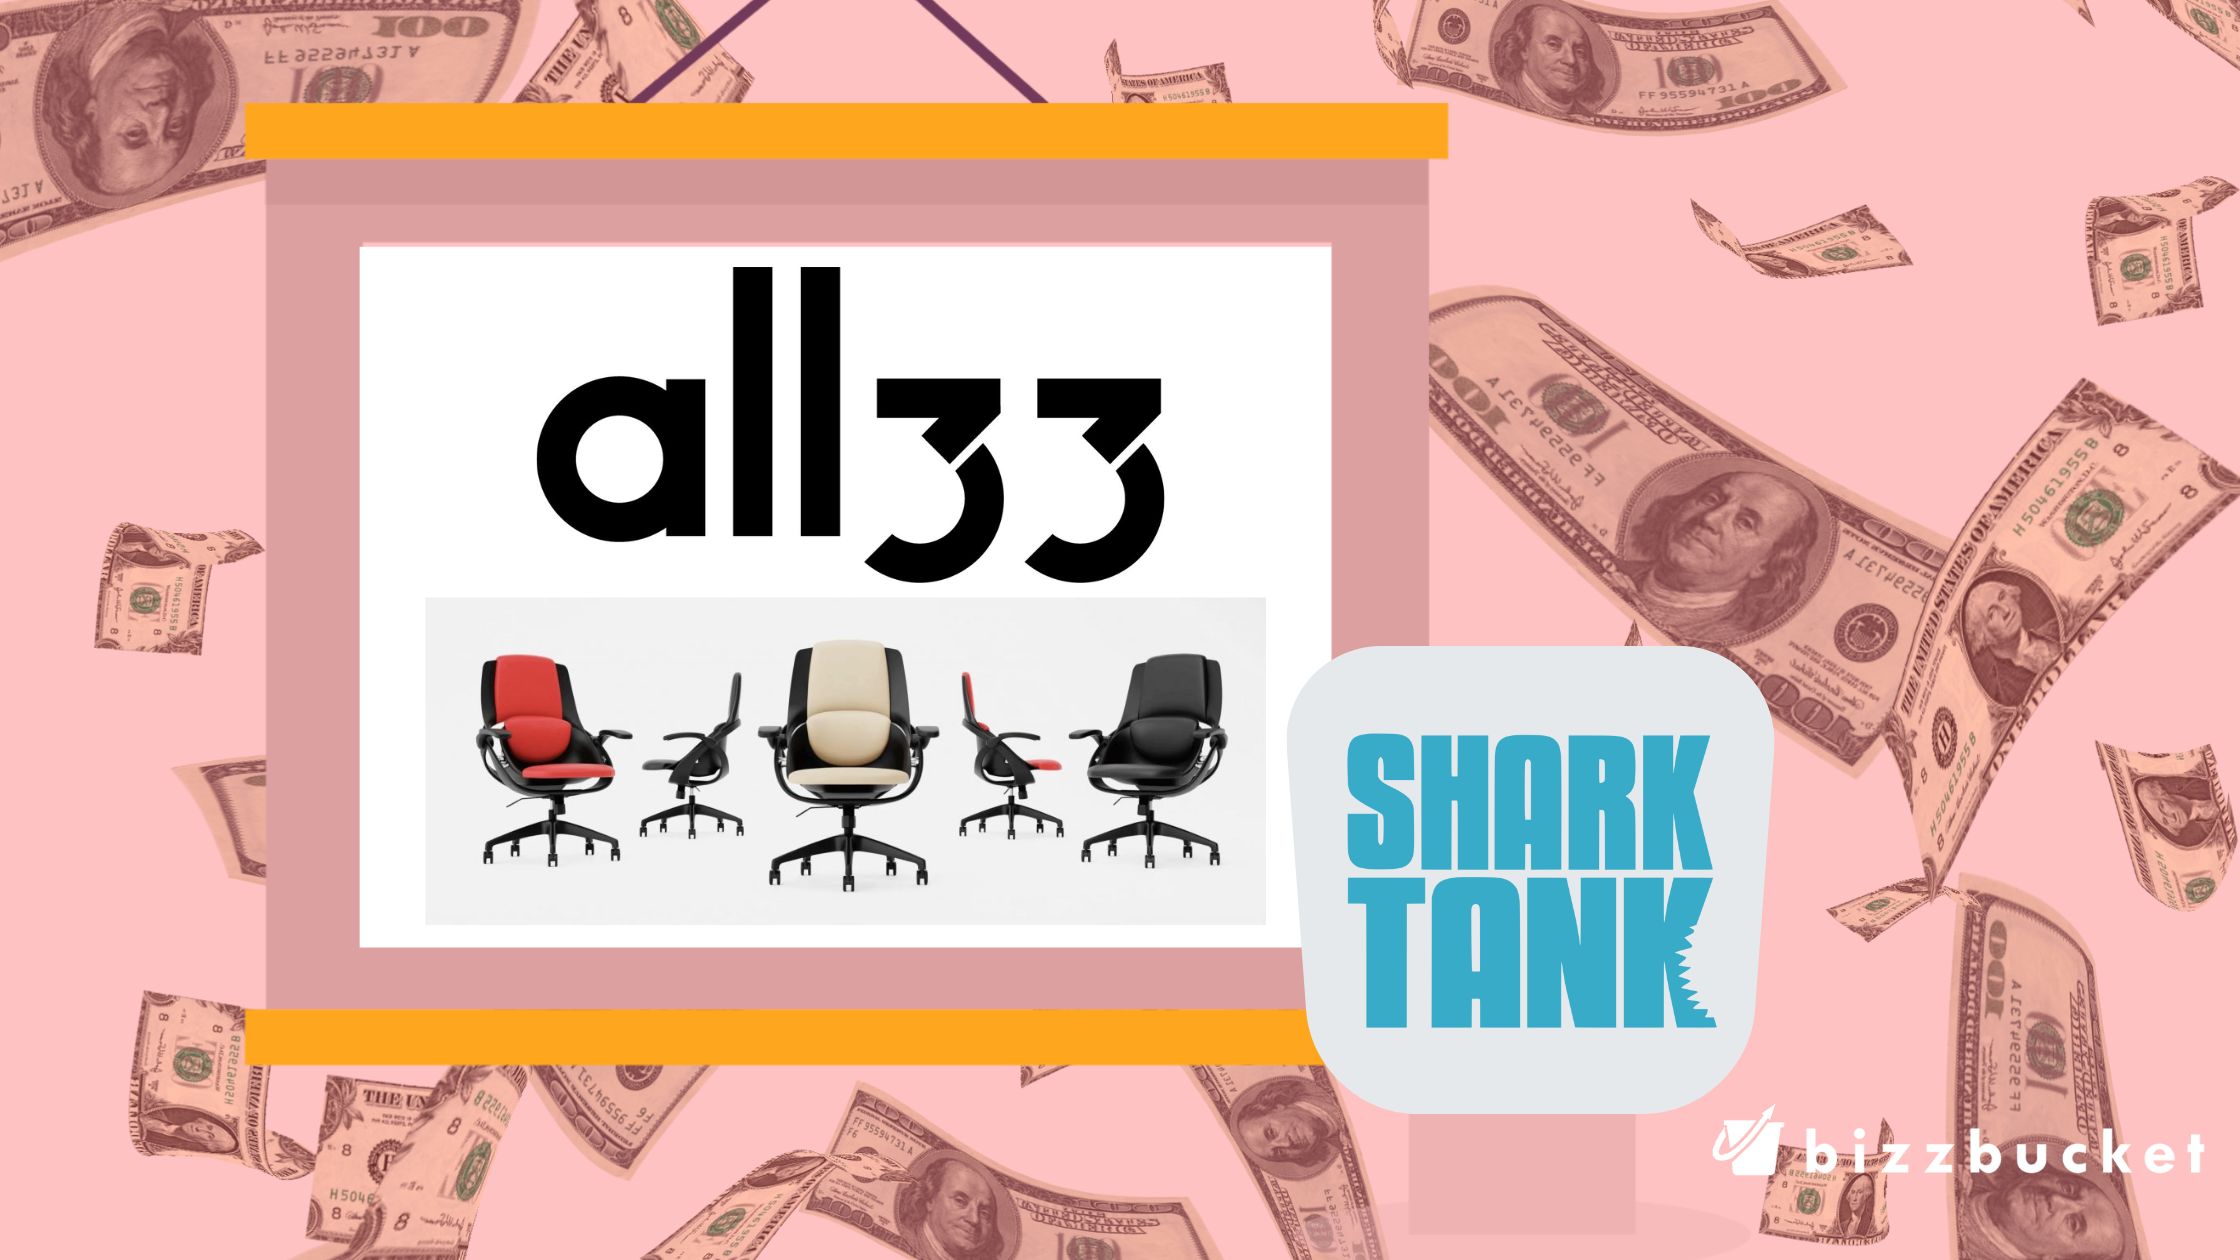 All33 Chairs shark tank update